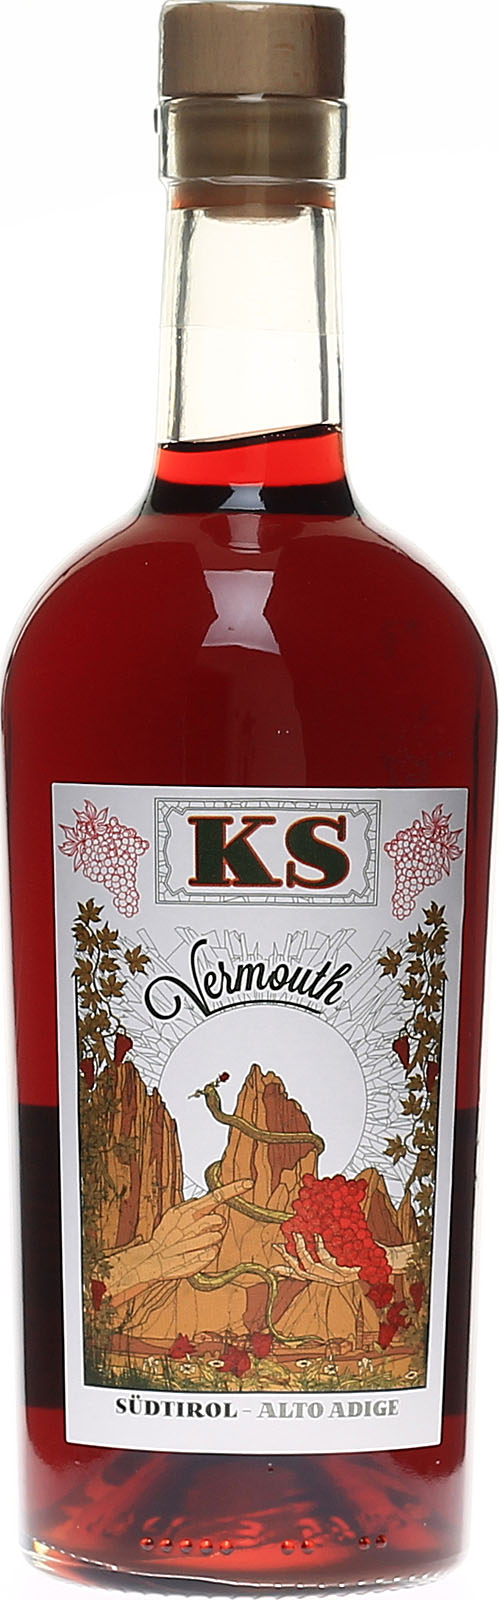 Roner KS Vermouth hervorragender roter rot, Vermouth